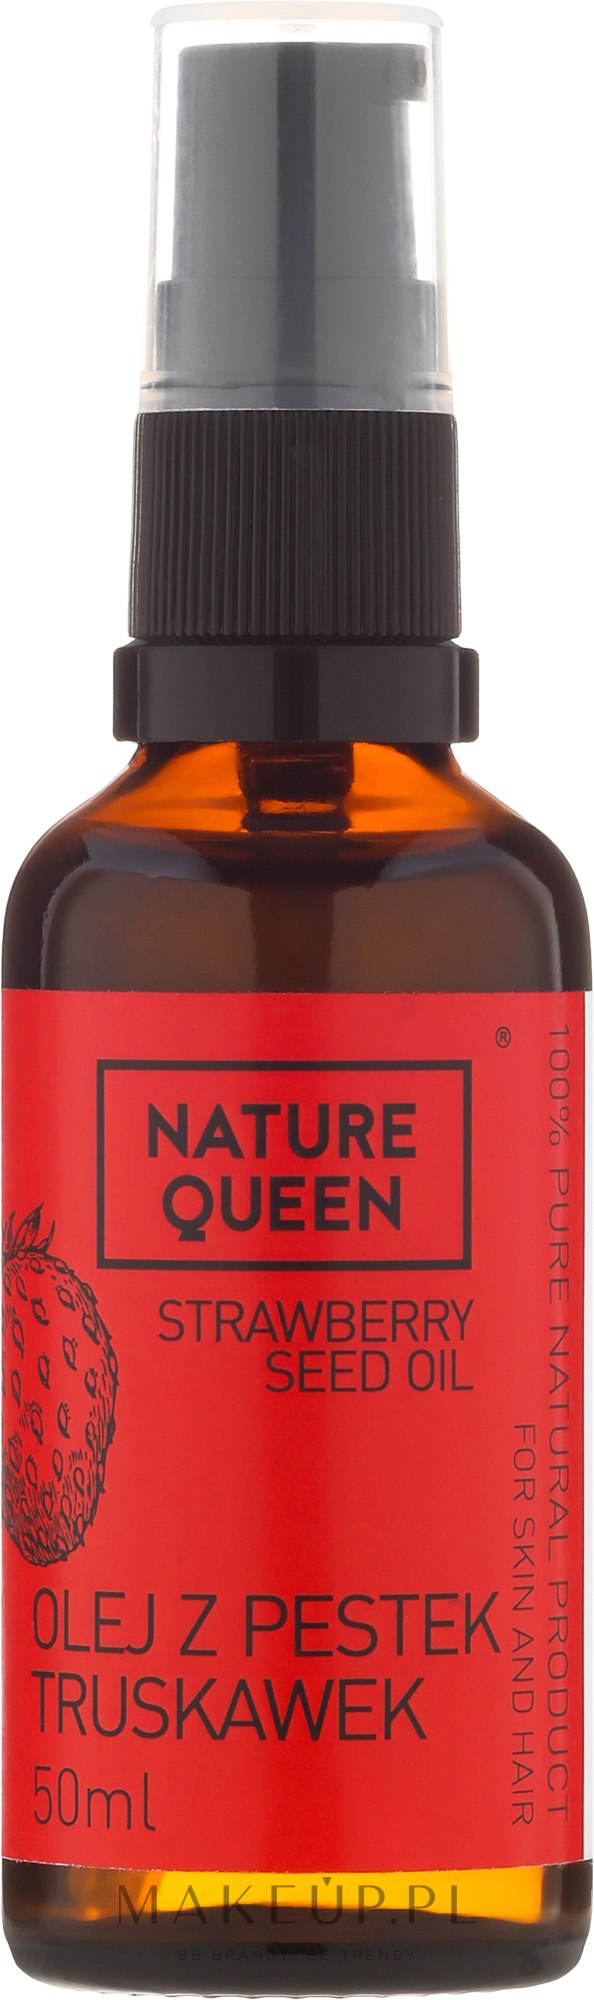 Olej z pestek truskawek - Nature Queen Strawberry Seed Oil — Zdjęcie 50 ml